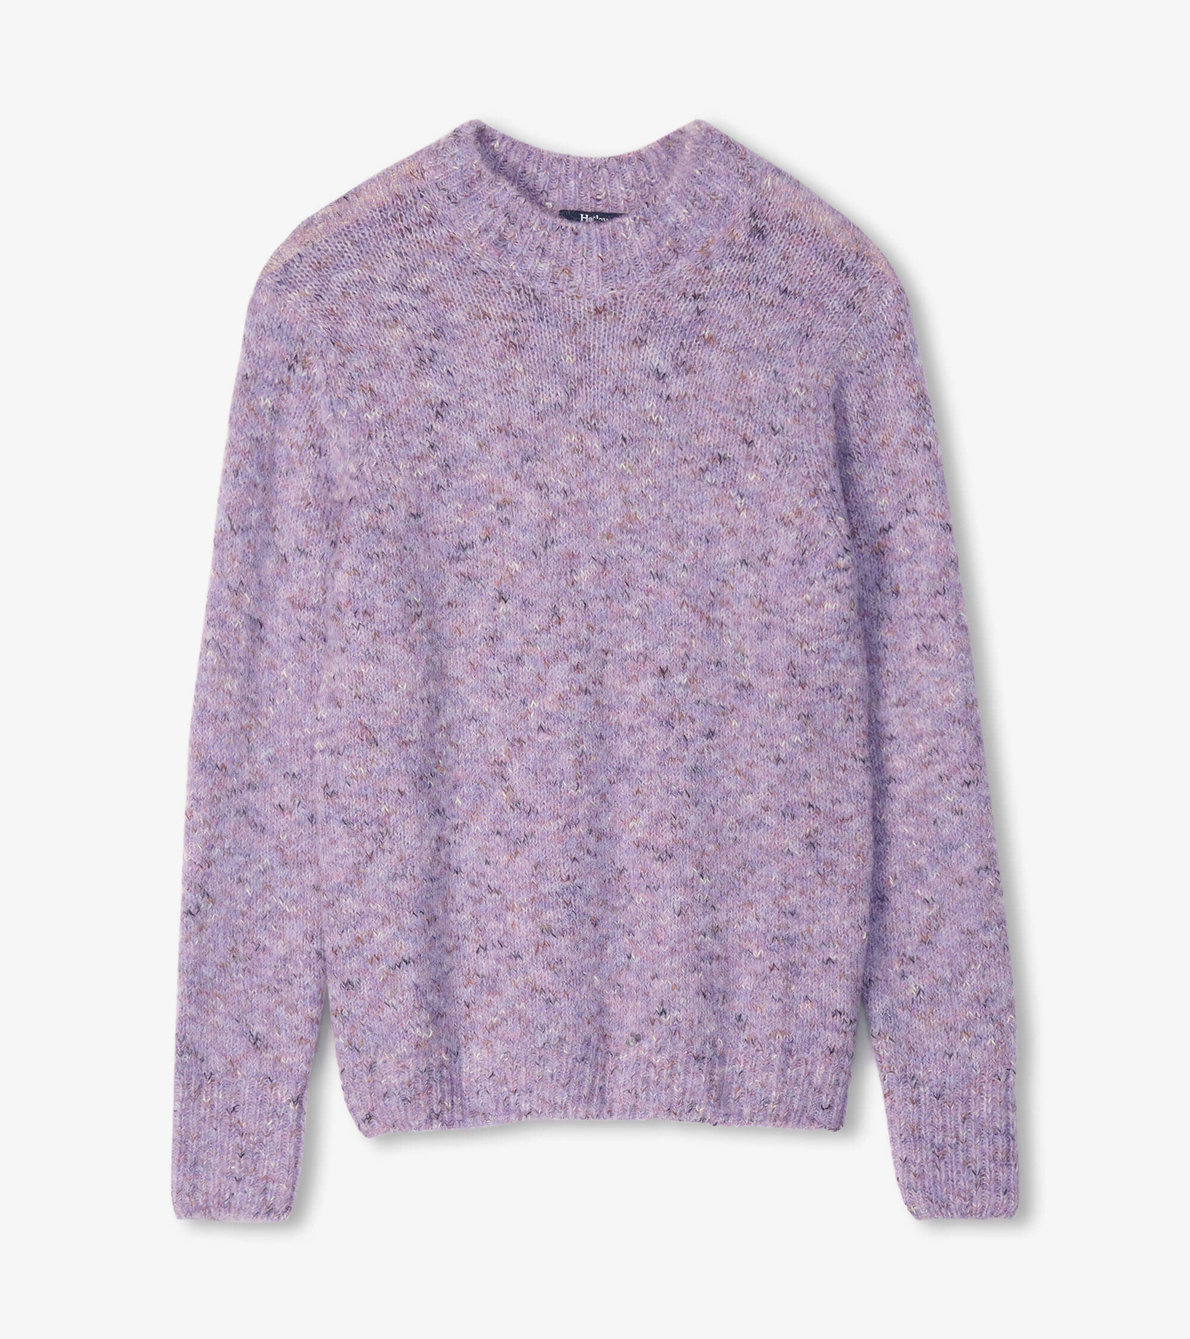 View larger image of Everywhere Sweater - Smokey Purple